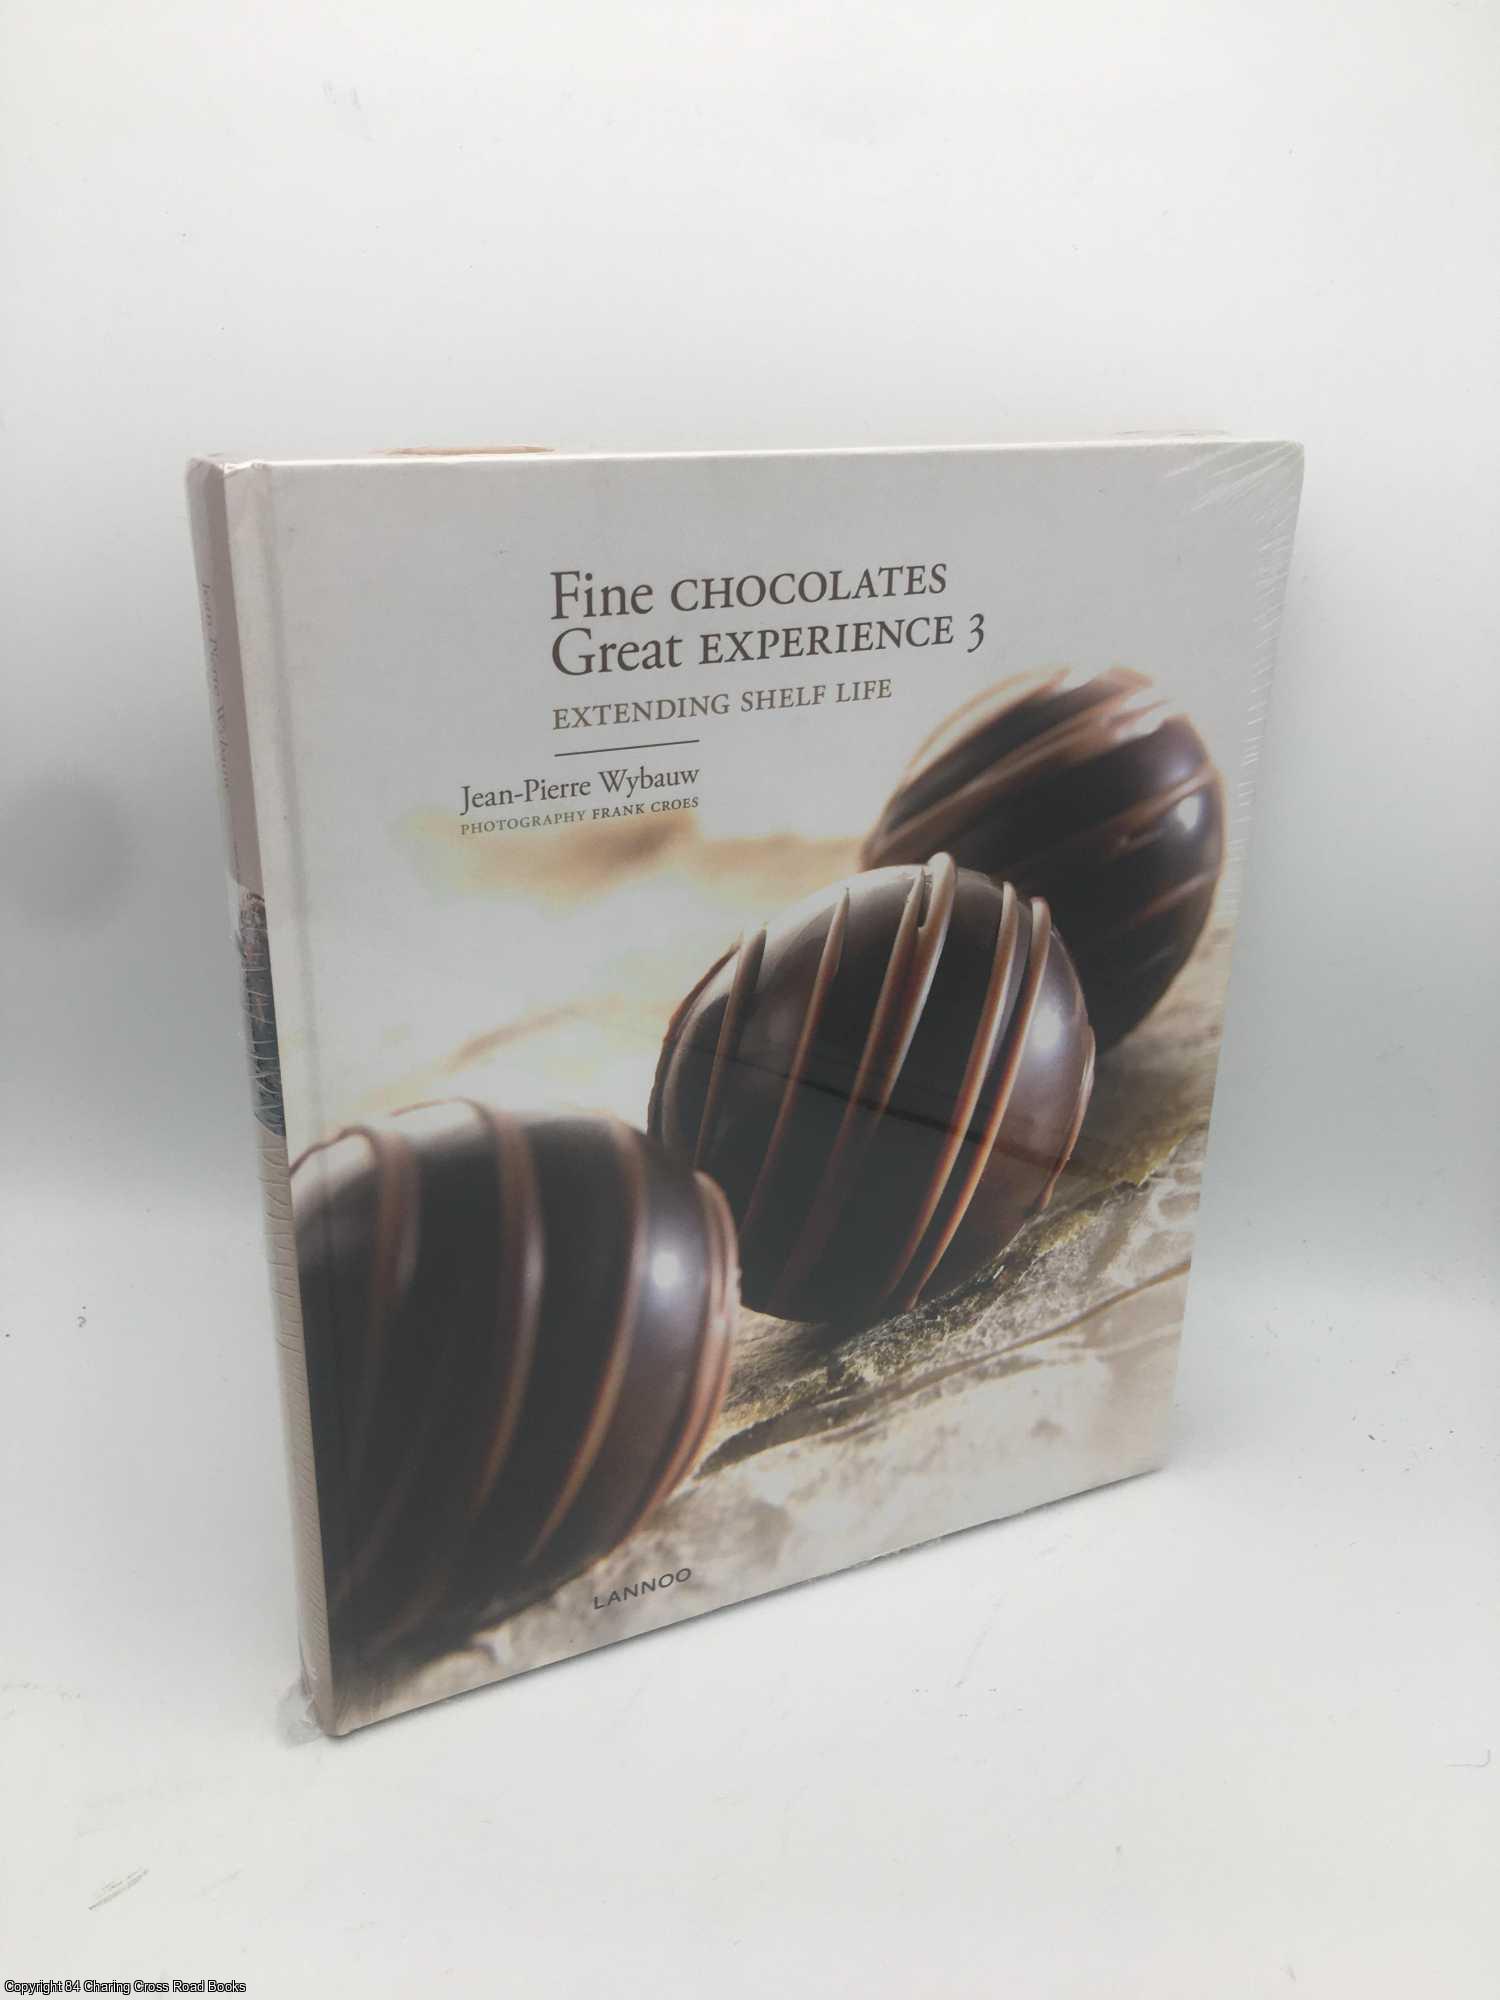 Wybauw, Jean-Pierre - Fine Chocolates Great Experience 3: Extending Shelf Life